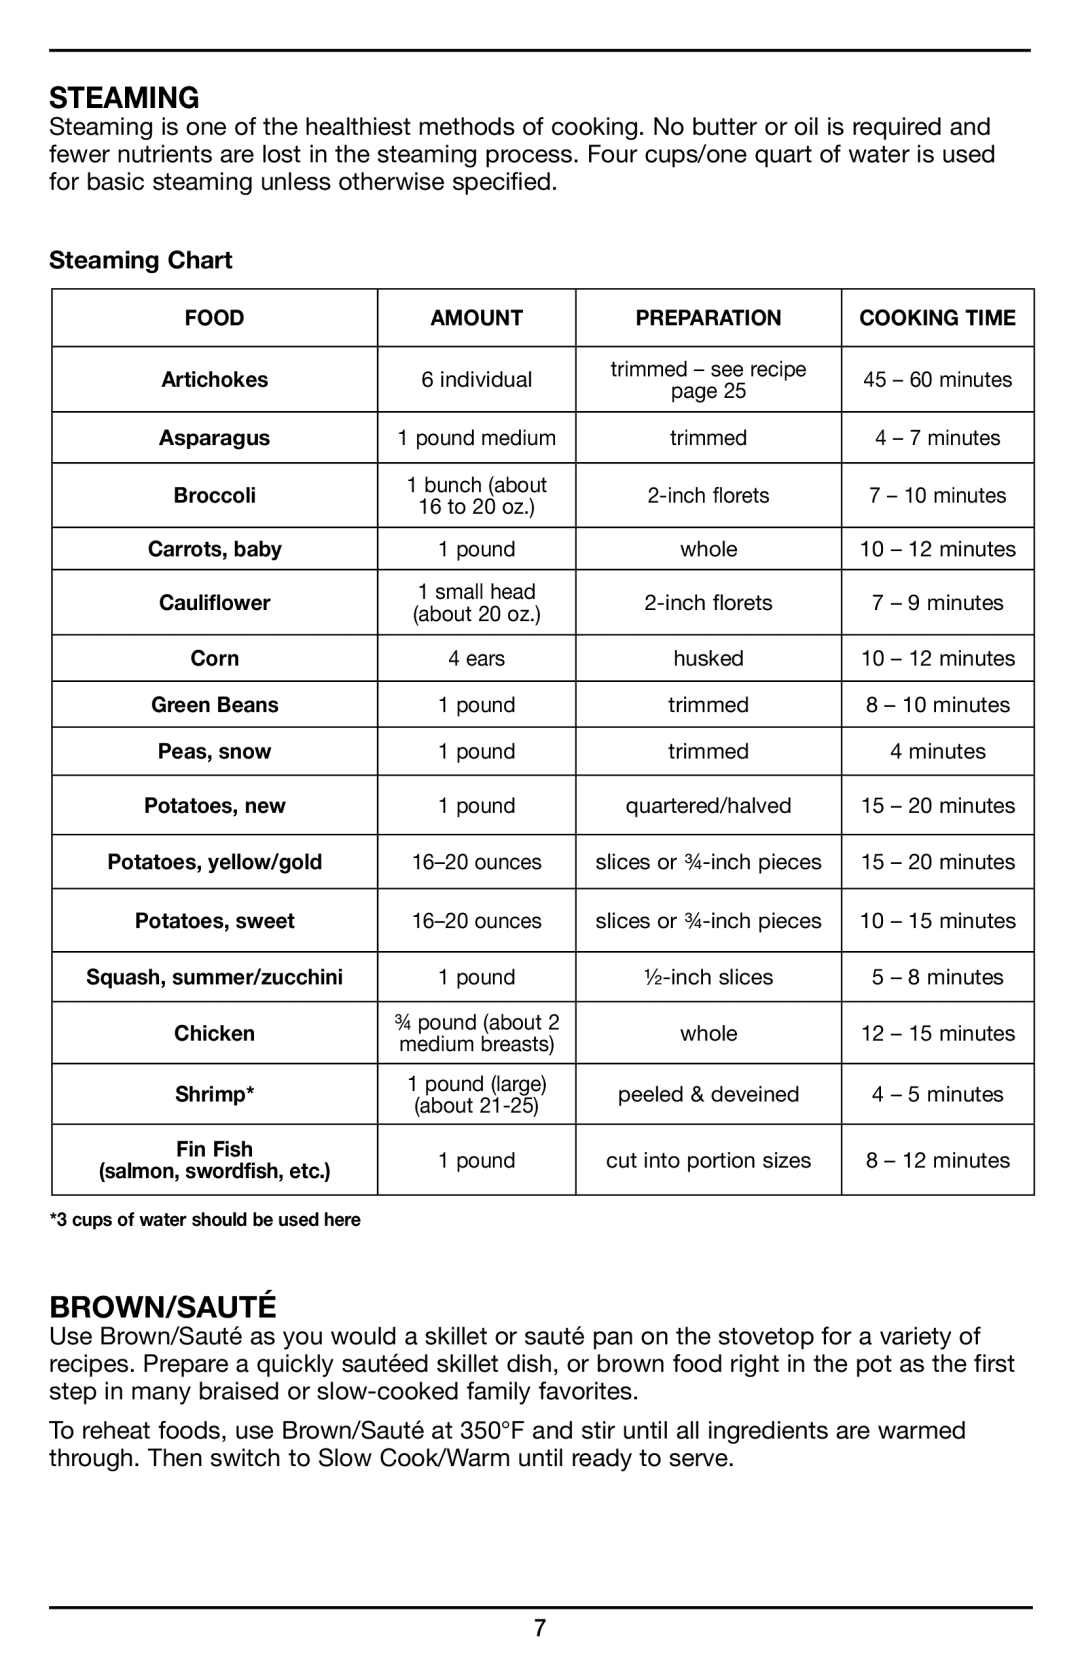 Cuisinart MSC-600 manual Brown/Sauté, Steaming Chart 